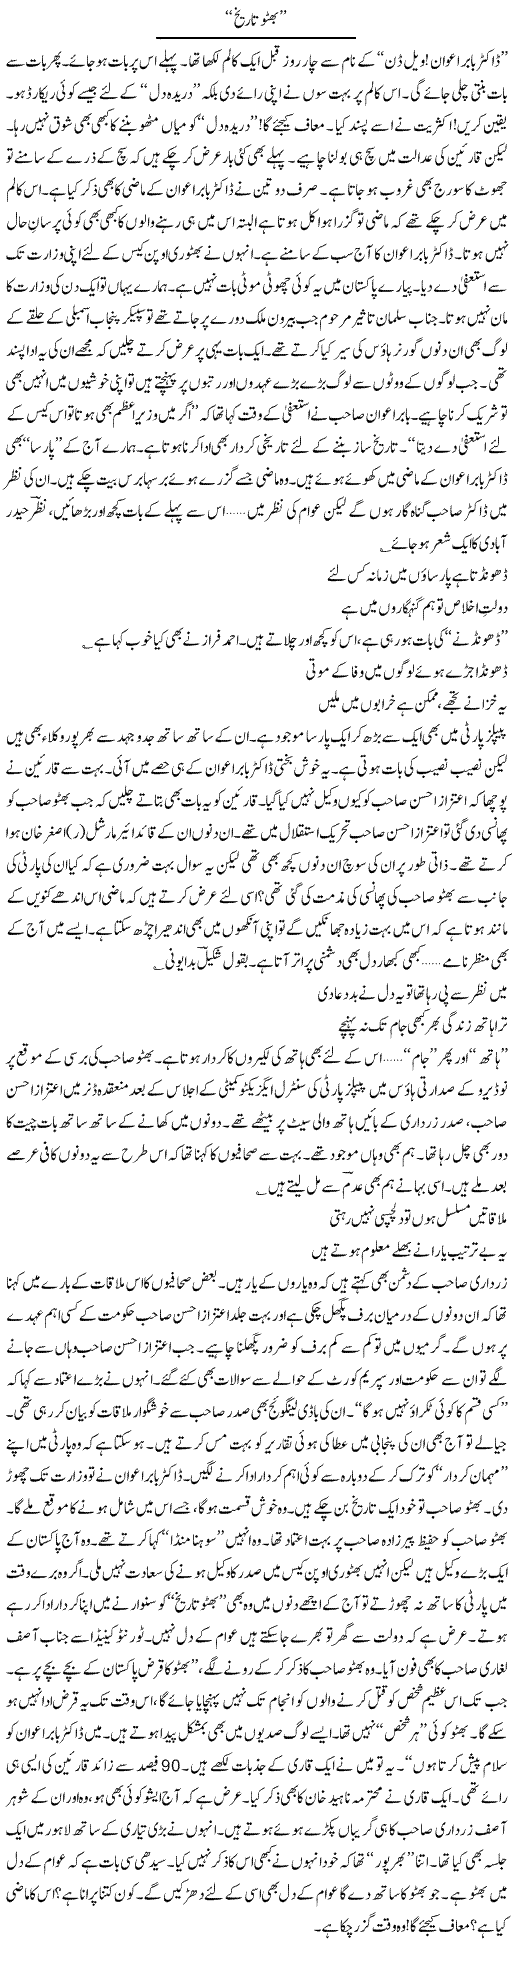 Bhutto History Express Column Ijaz Hafeez 24 April 2011